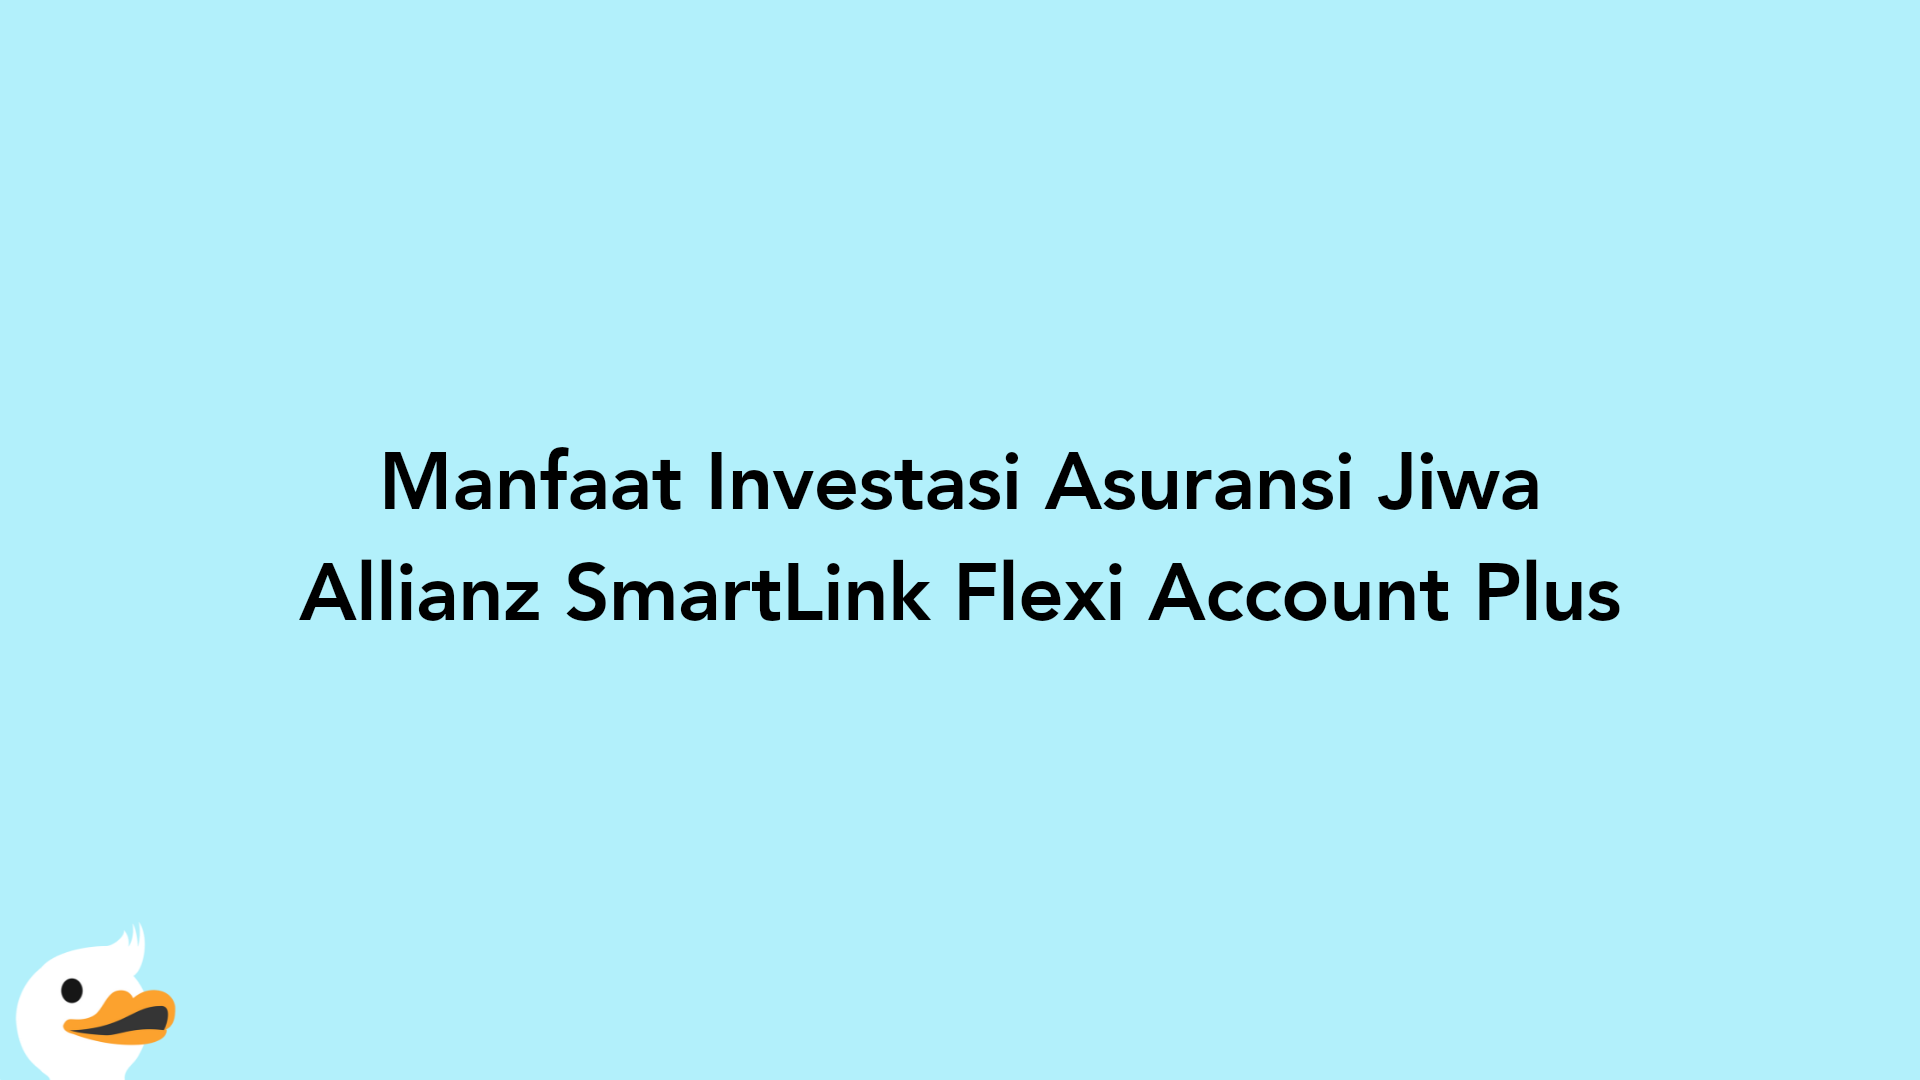 Manfaat Investasi Asuransi Jiwa Allianz SmartLink Flexi Account Plus